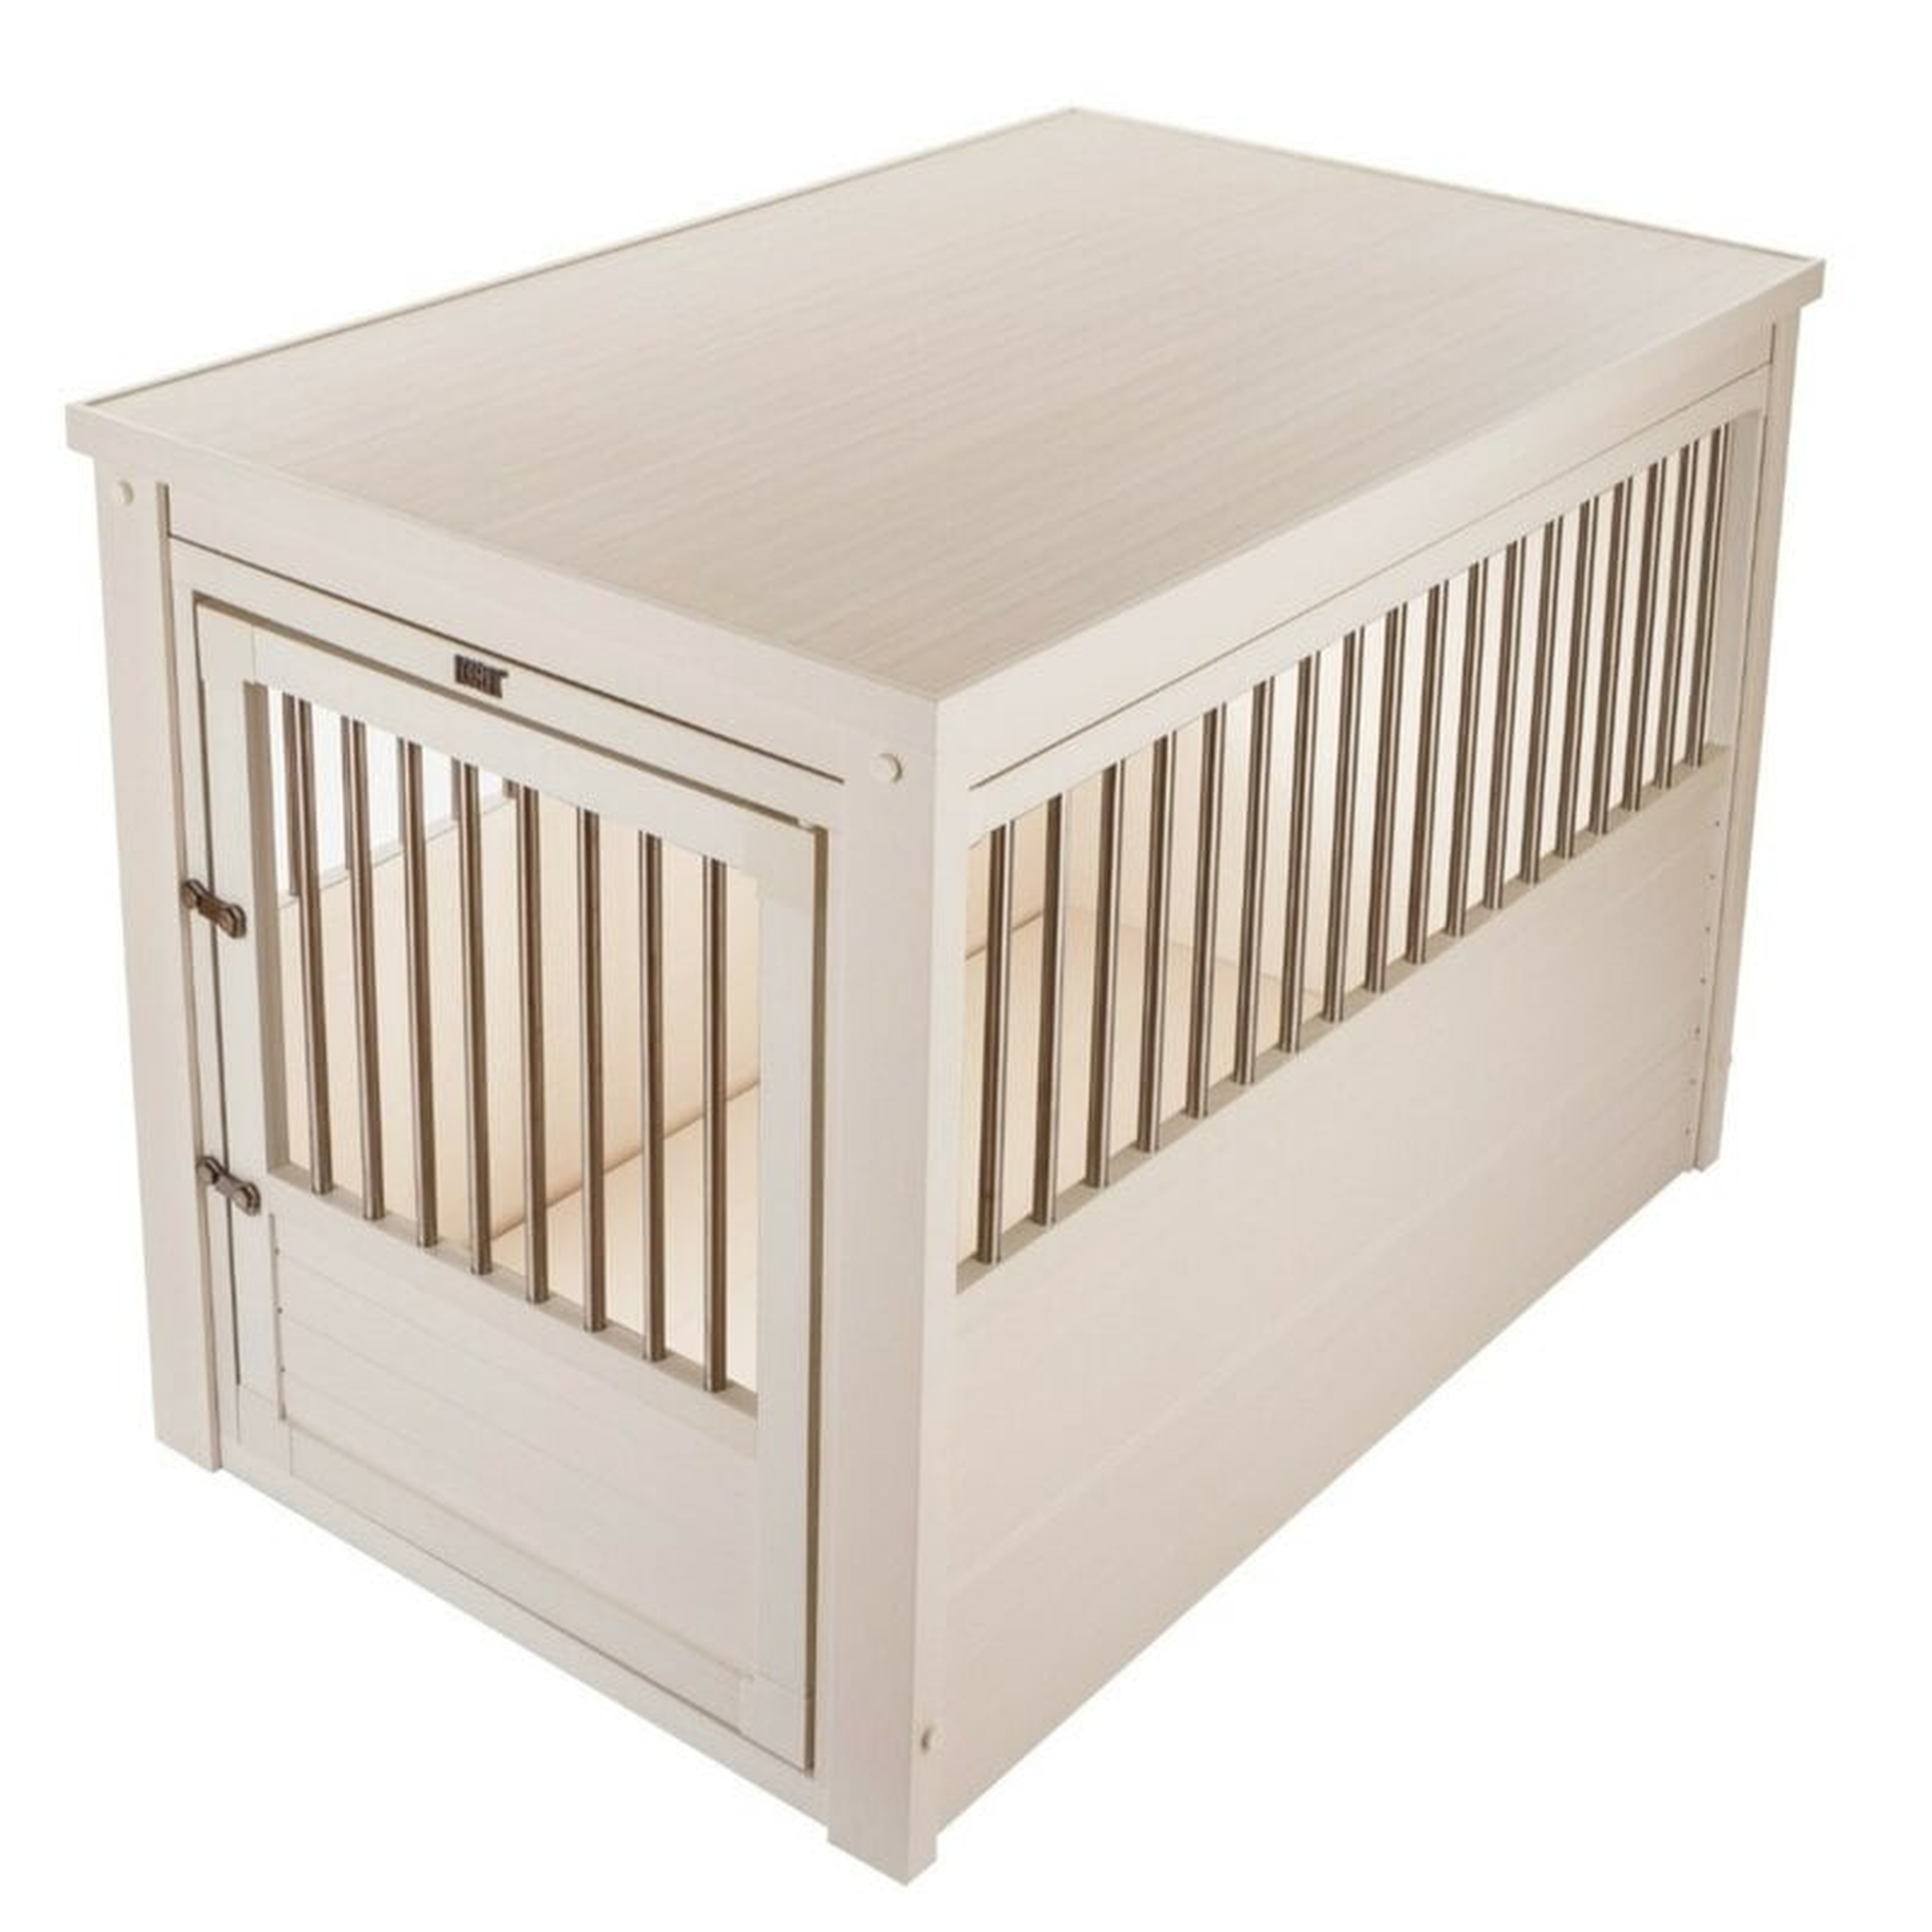 Ginny Pet Crate - Antique White, Large - Wayfair